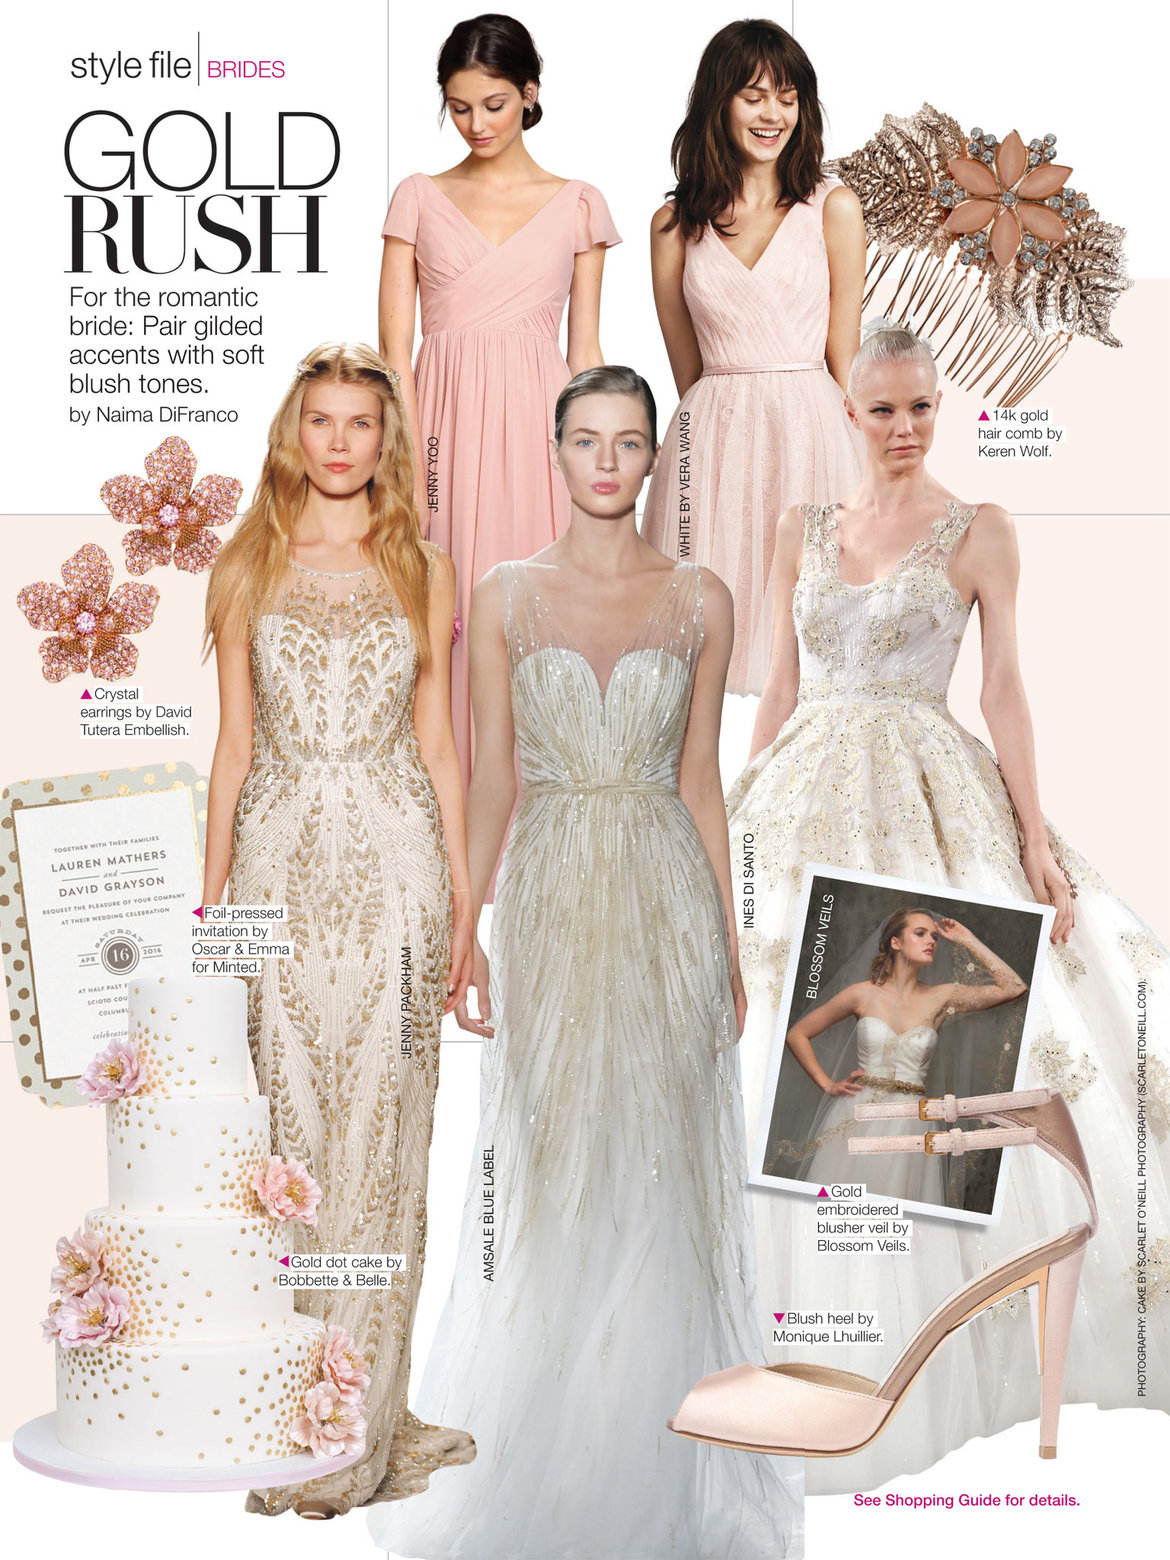 bridal guide november december 2015 issue